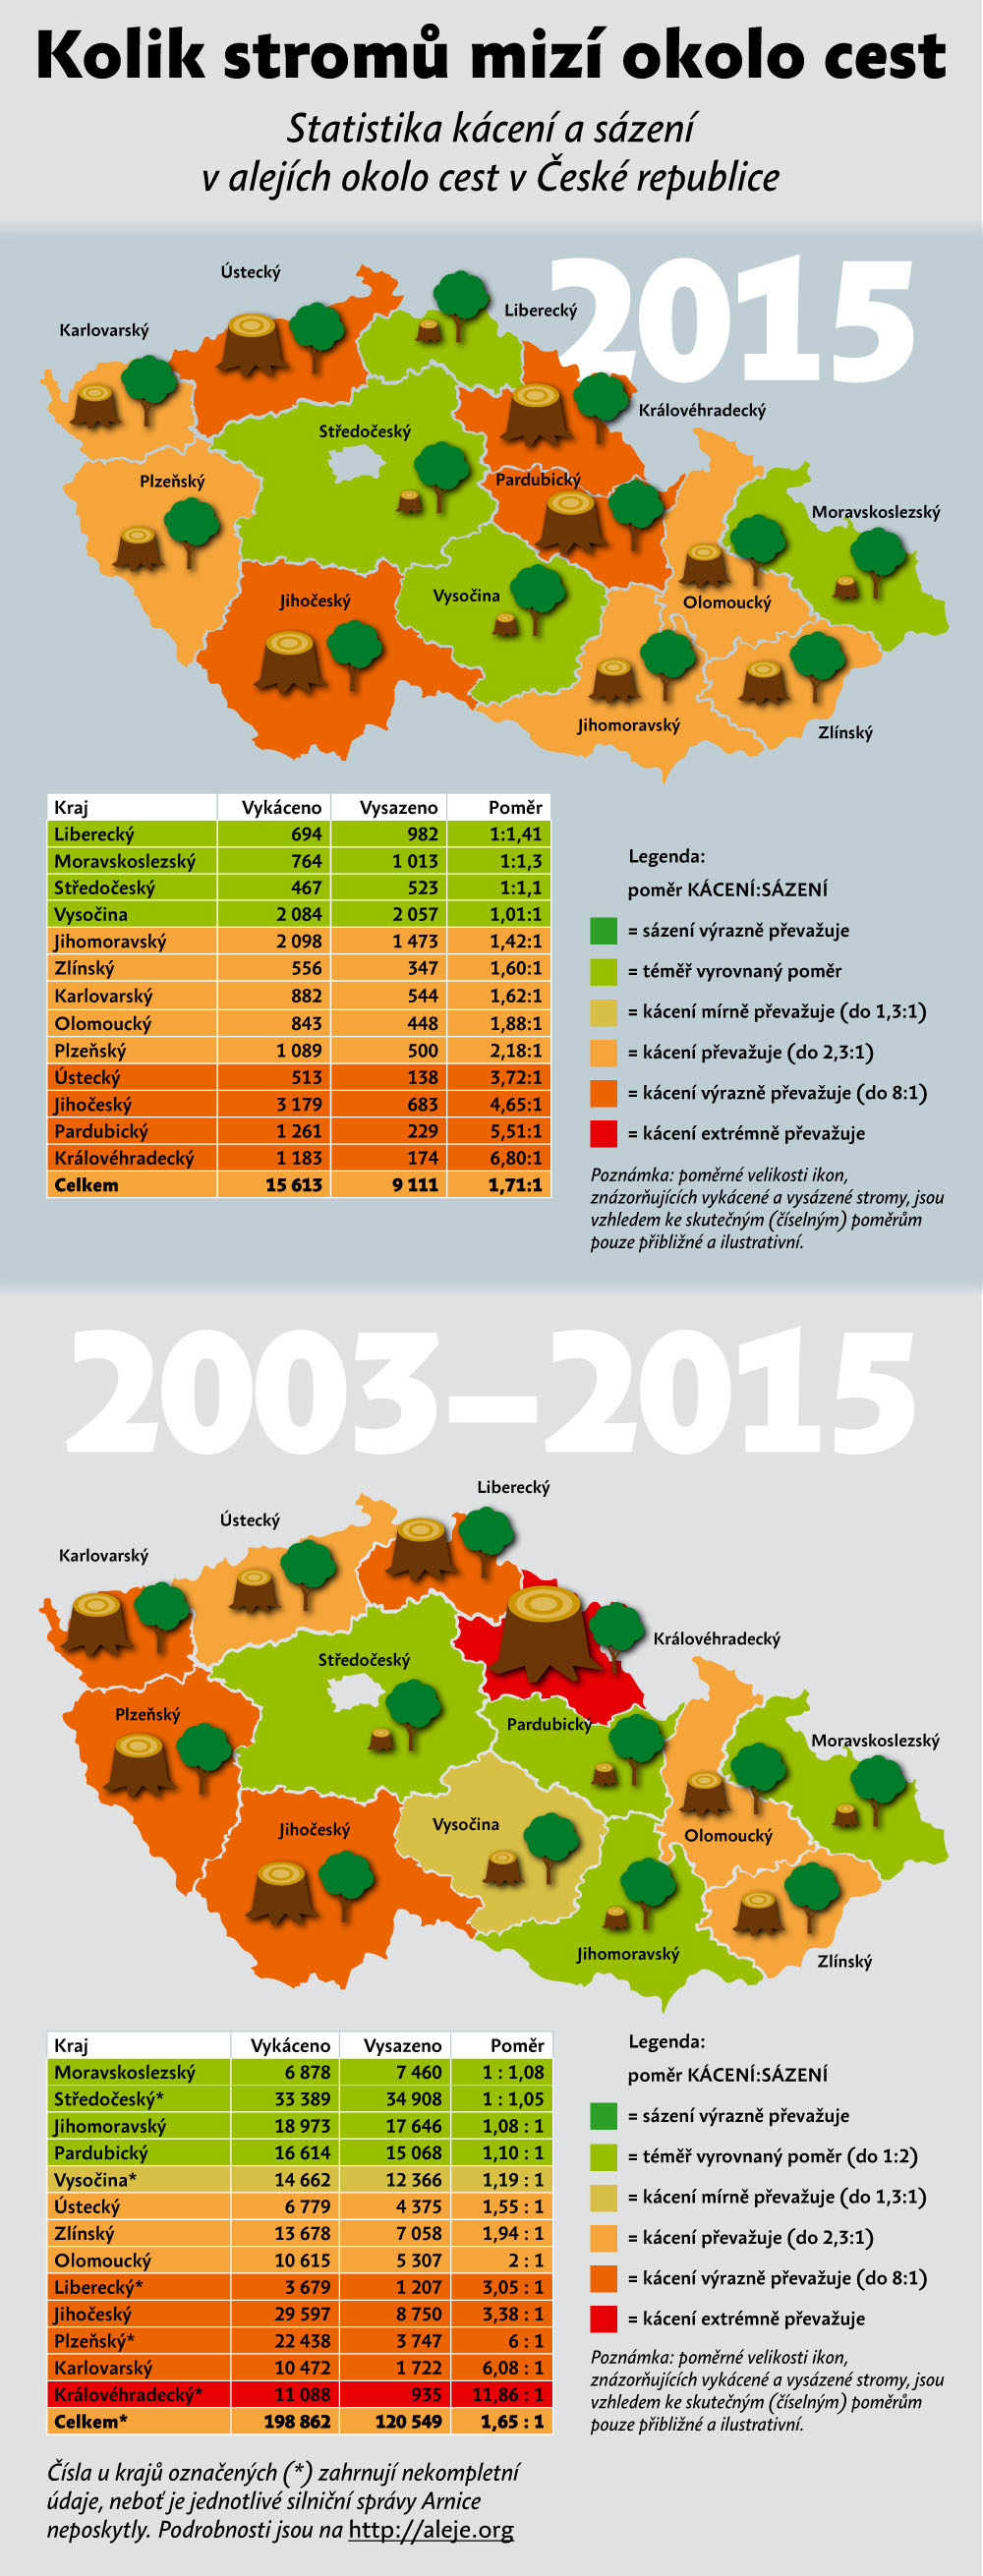 2003-2015 mapa statistiky kaceni